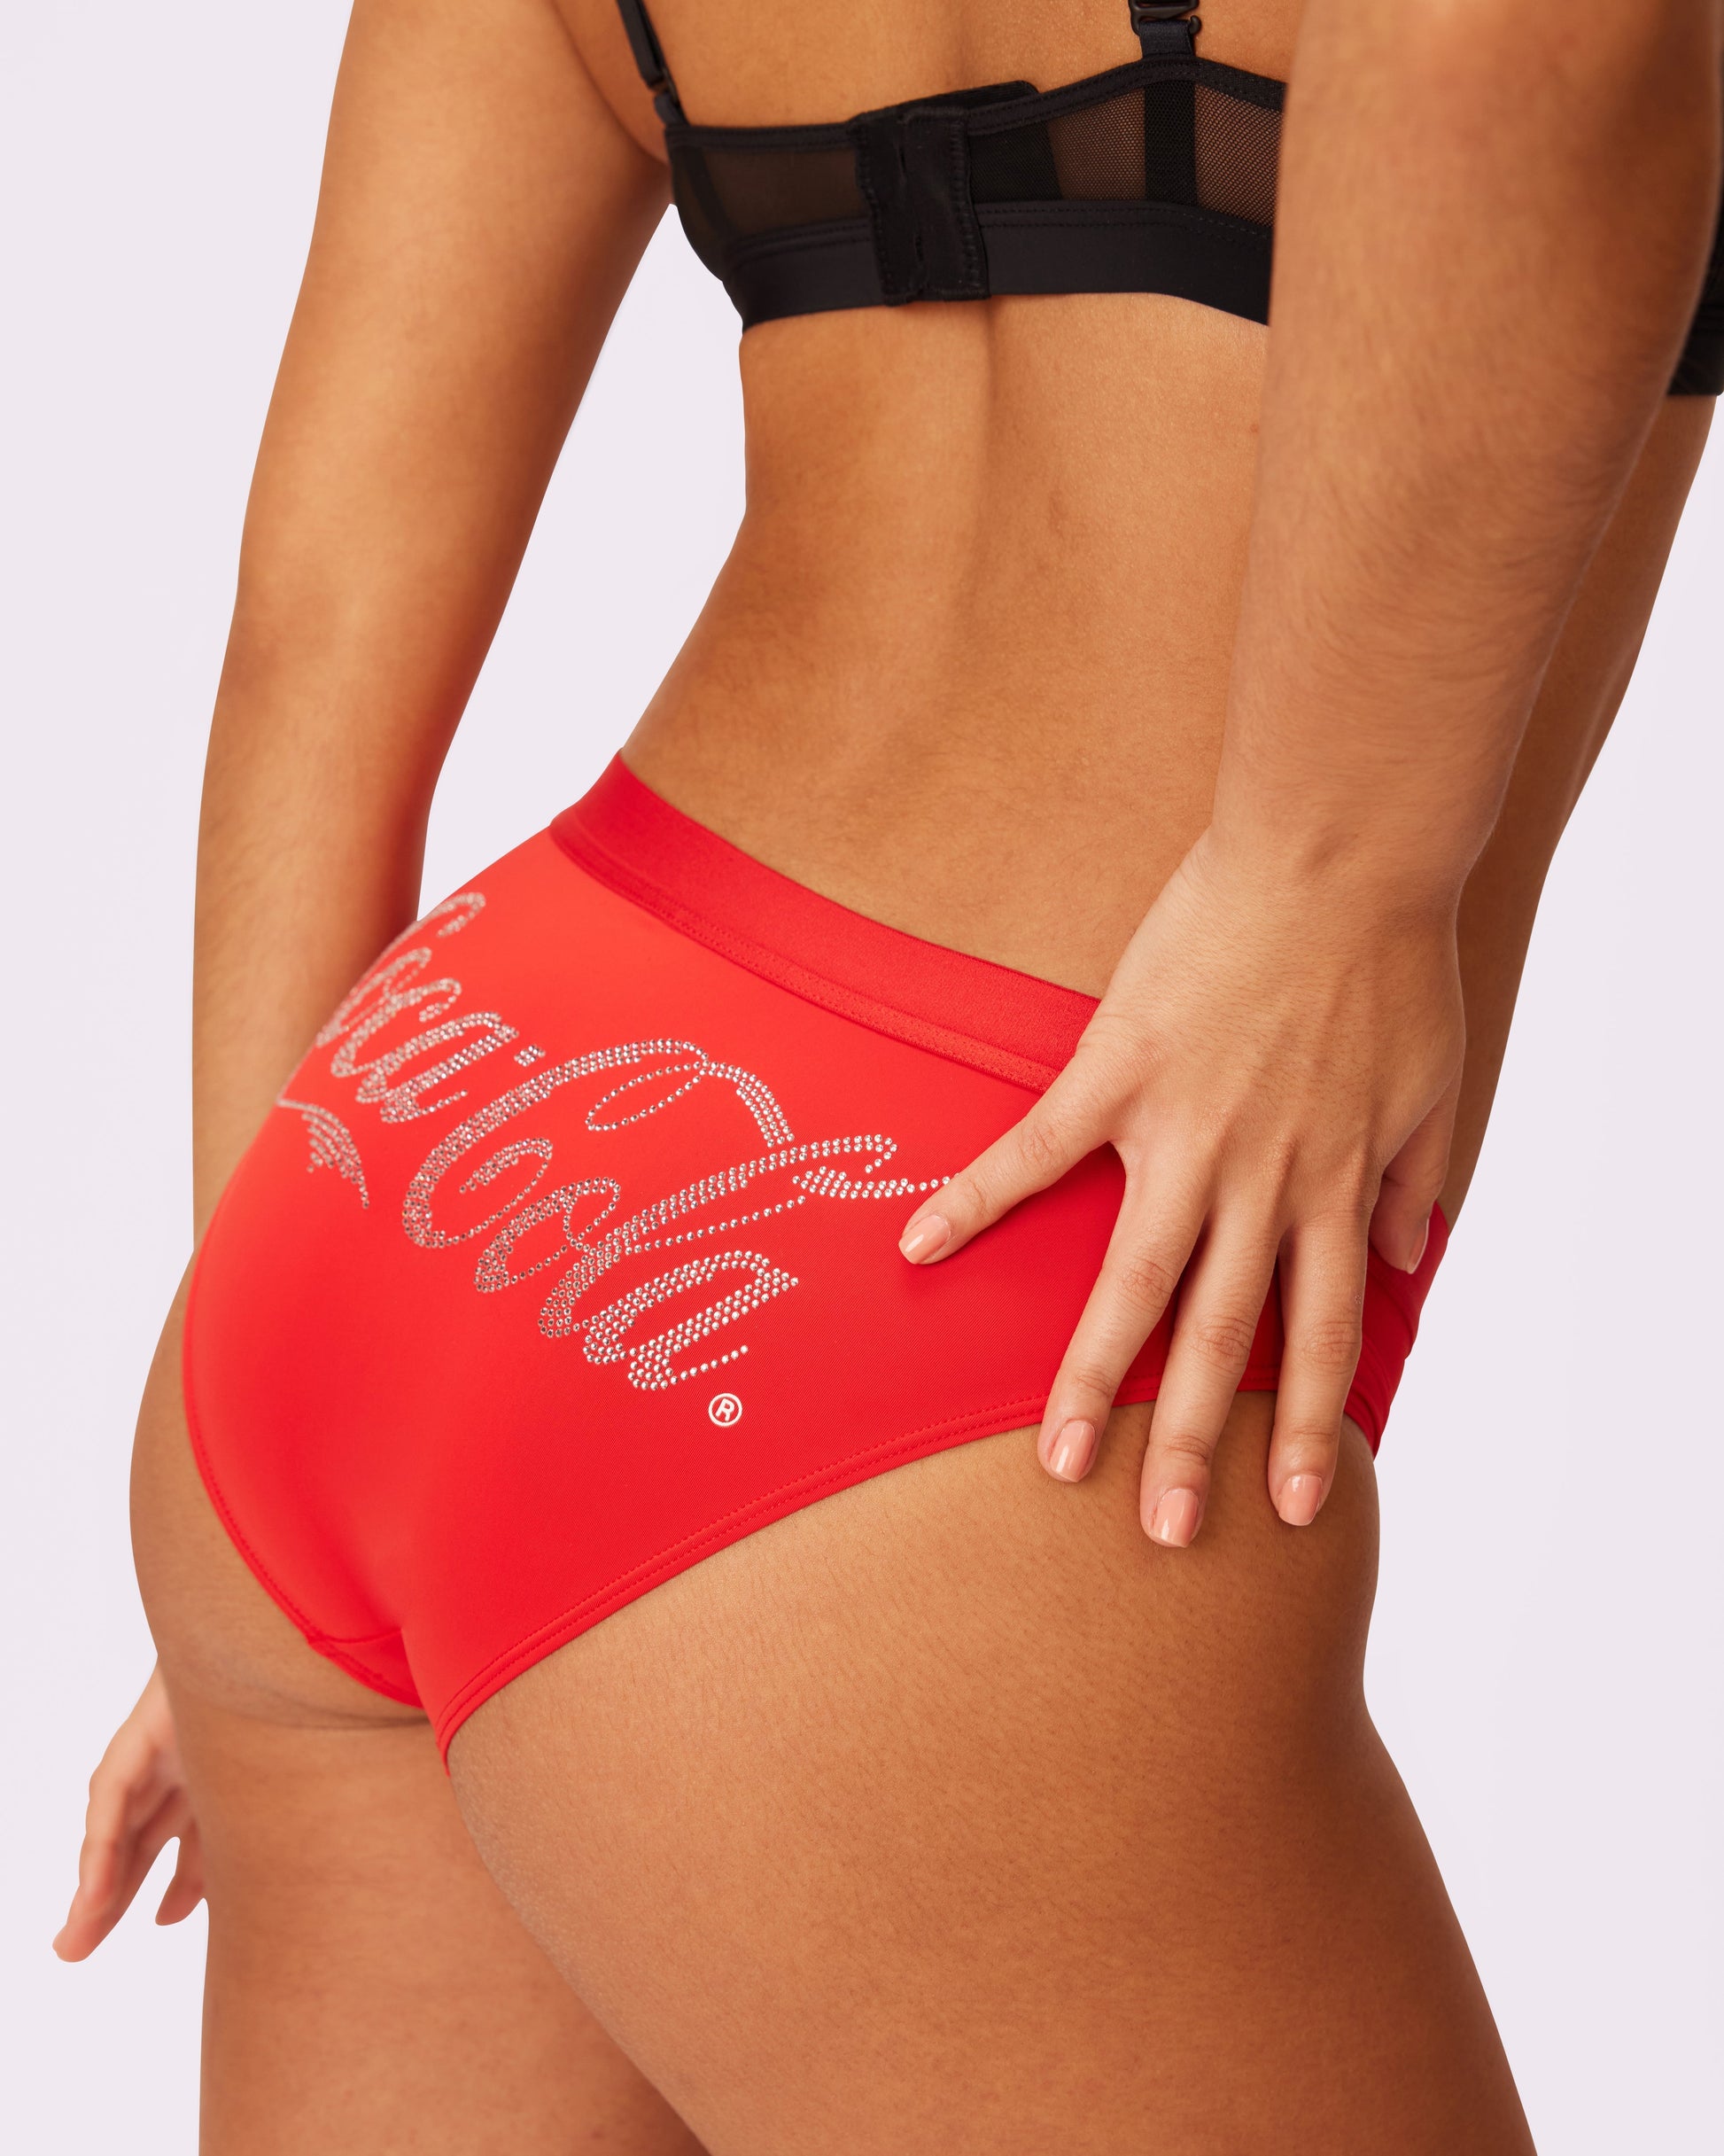 Special Edition Coca-ColaÂ¬Ã† Dream Comfort Brief, Women's Underwear, Starting at $9